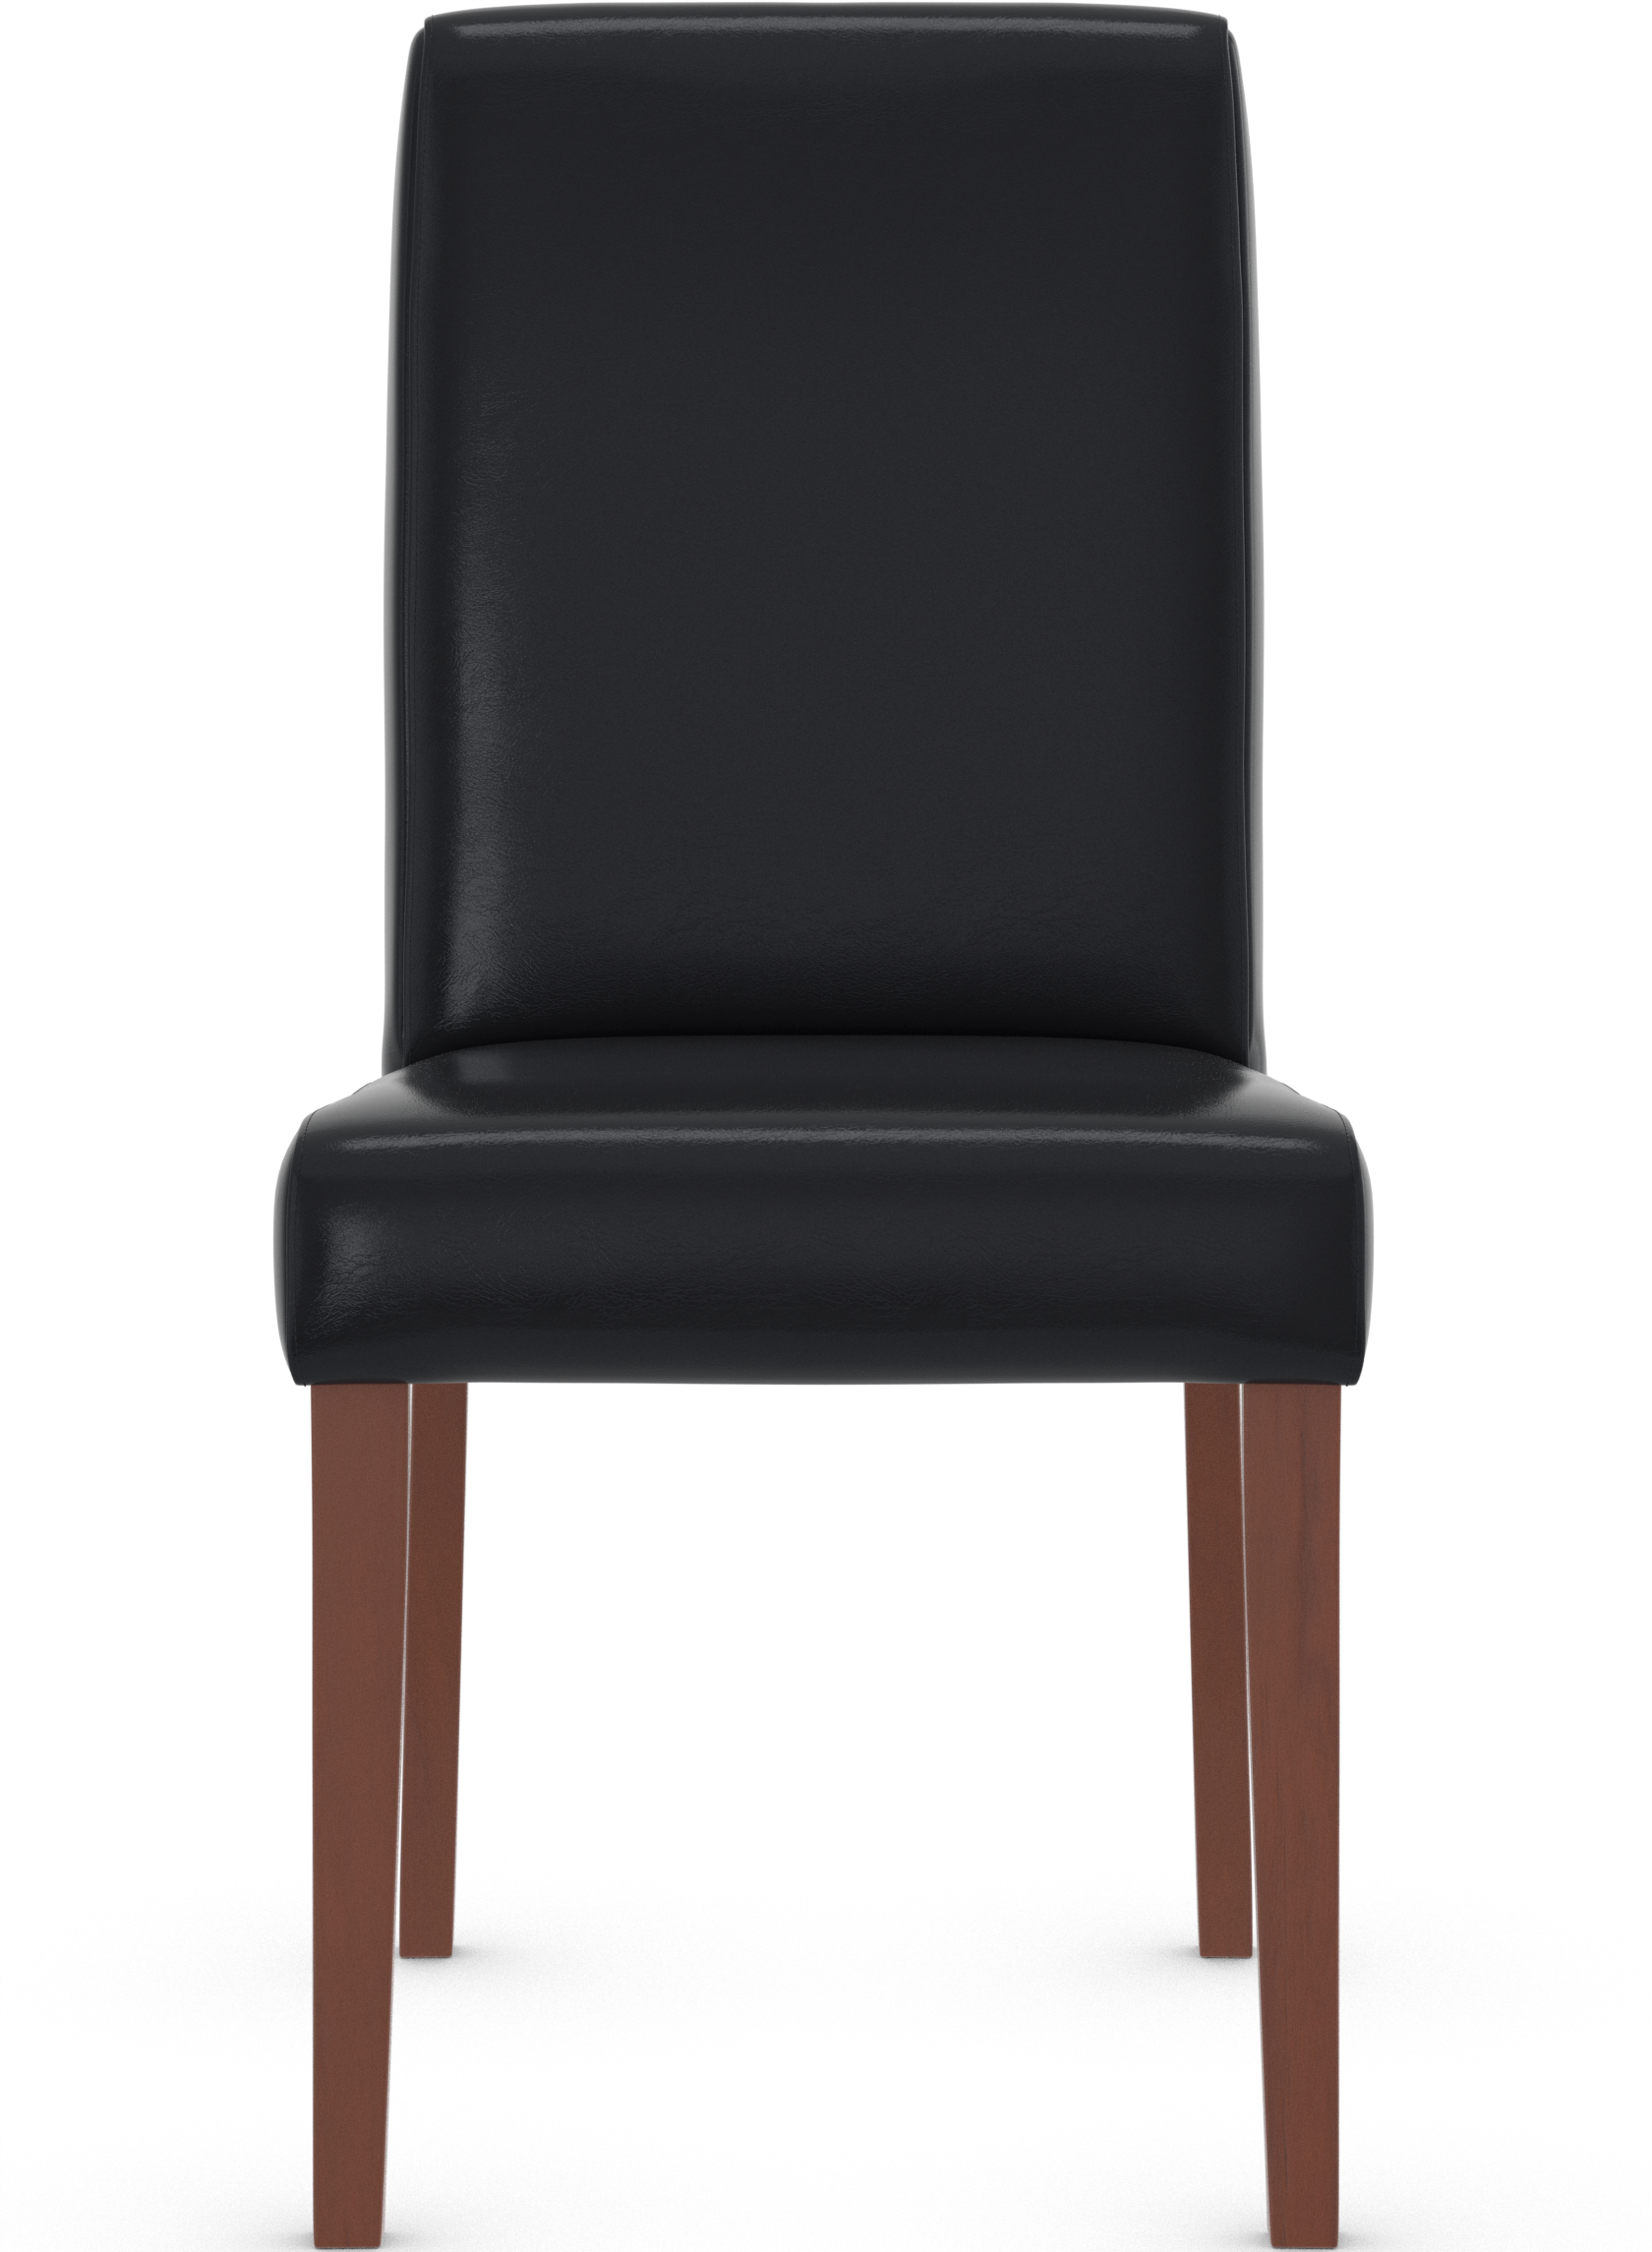 Firenze Matt Black Dining Chair Bonded Leather